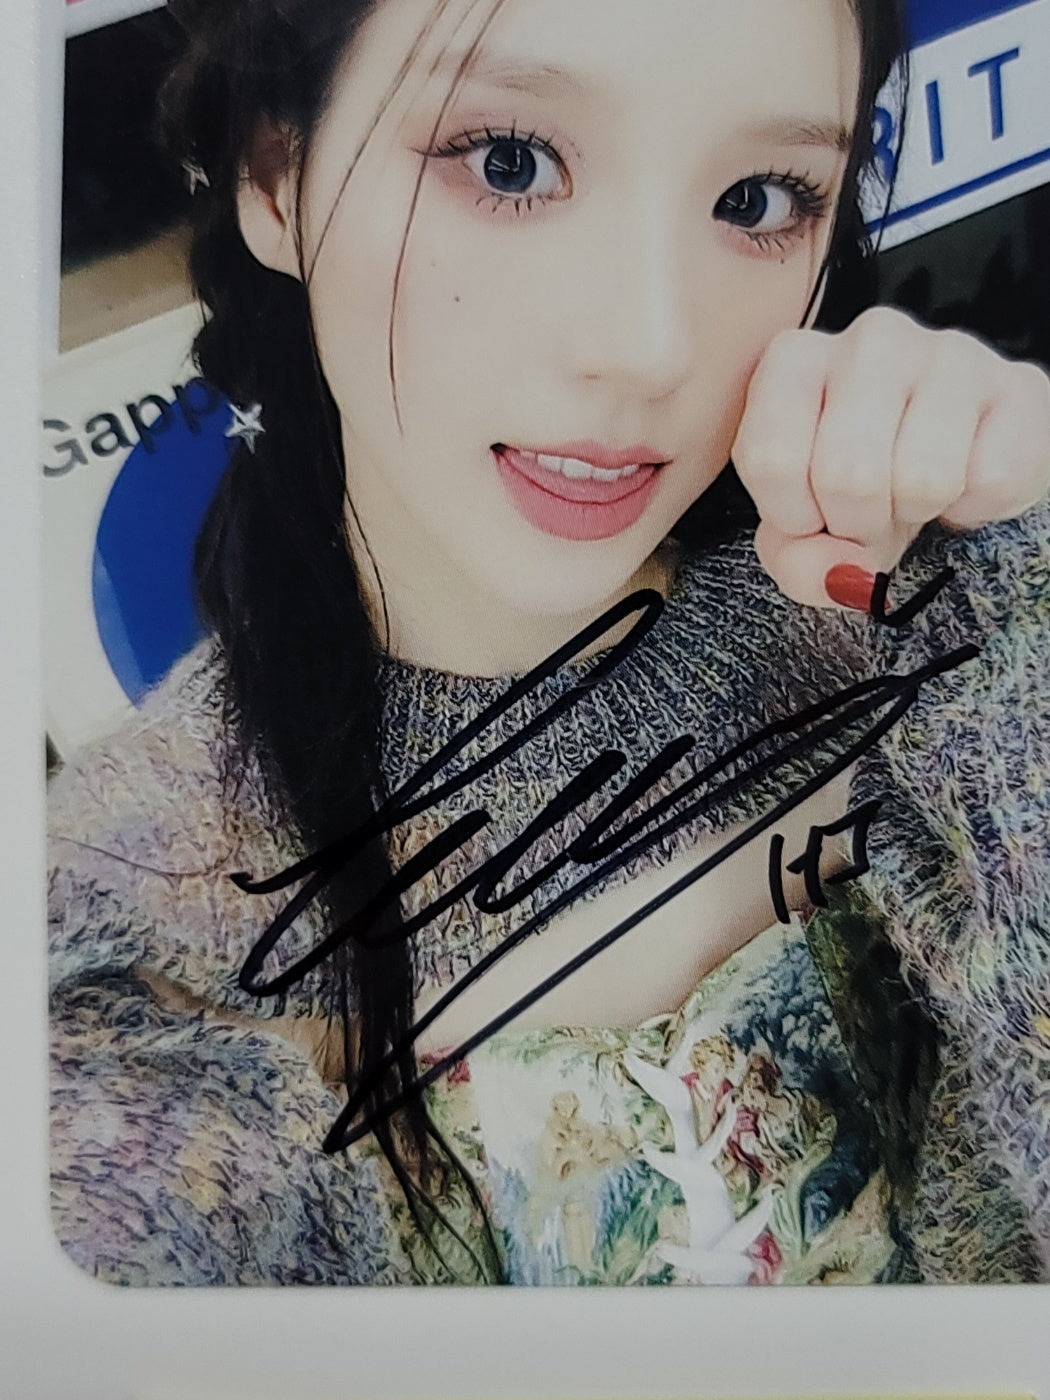 HeeJin 1st Mini "K" - Hand Autographed(Signed) Mini Postcard [23.11.10]